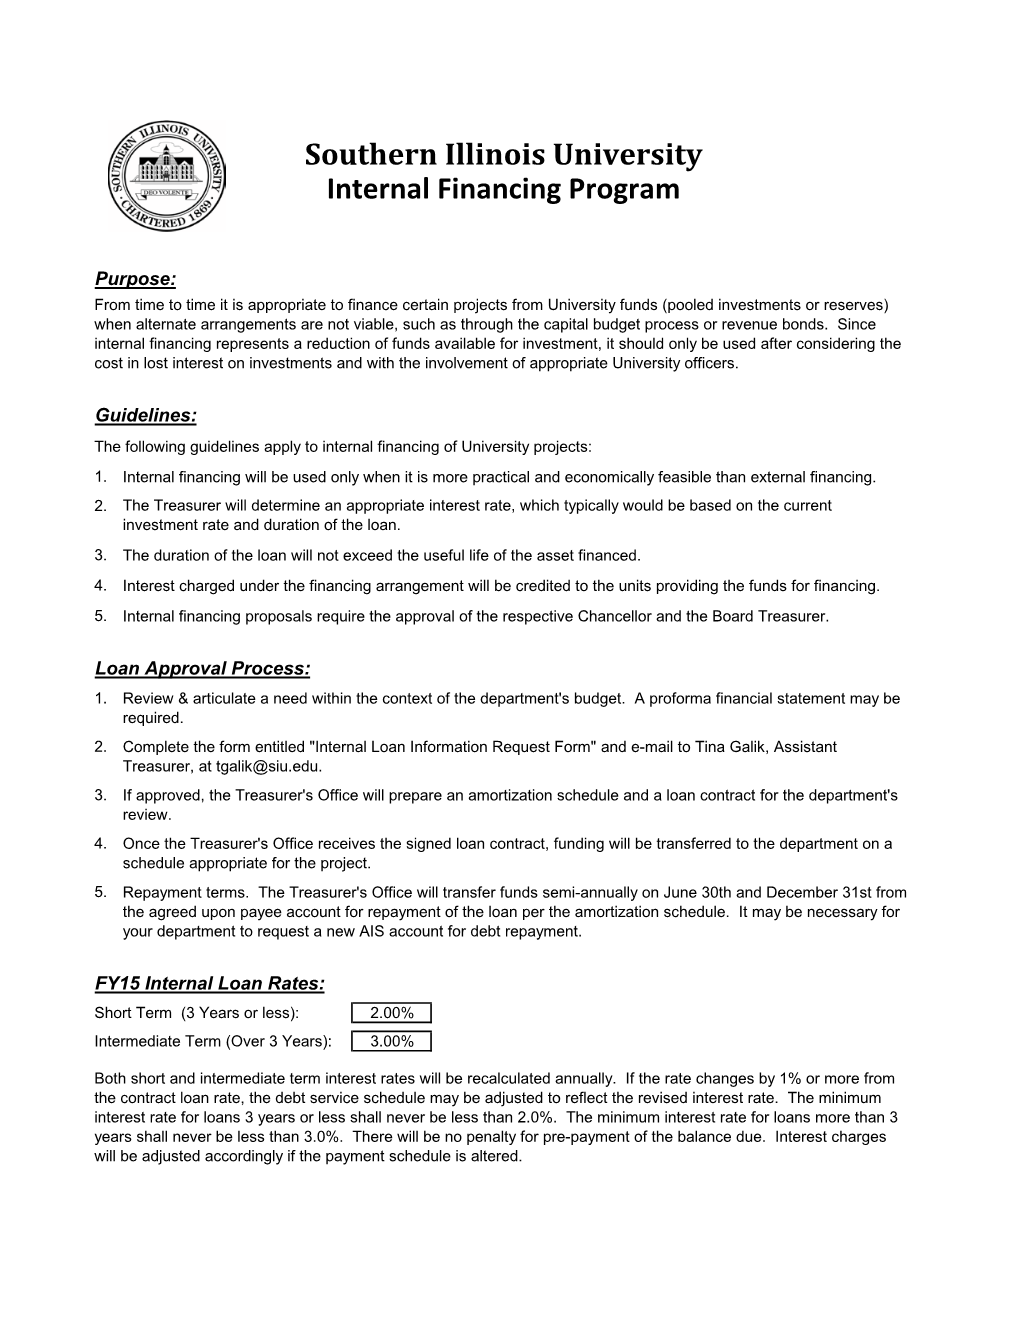 Southern Illinois University Internal Financing Program